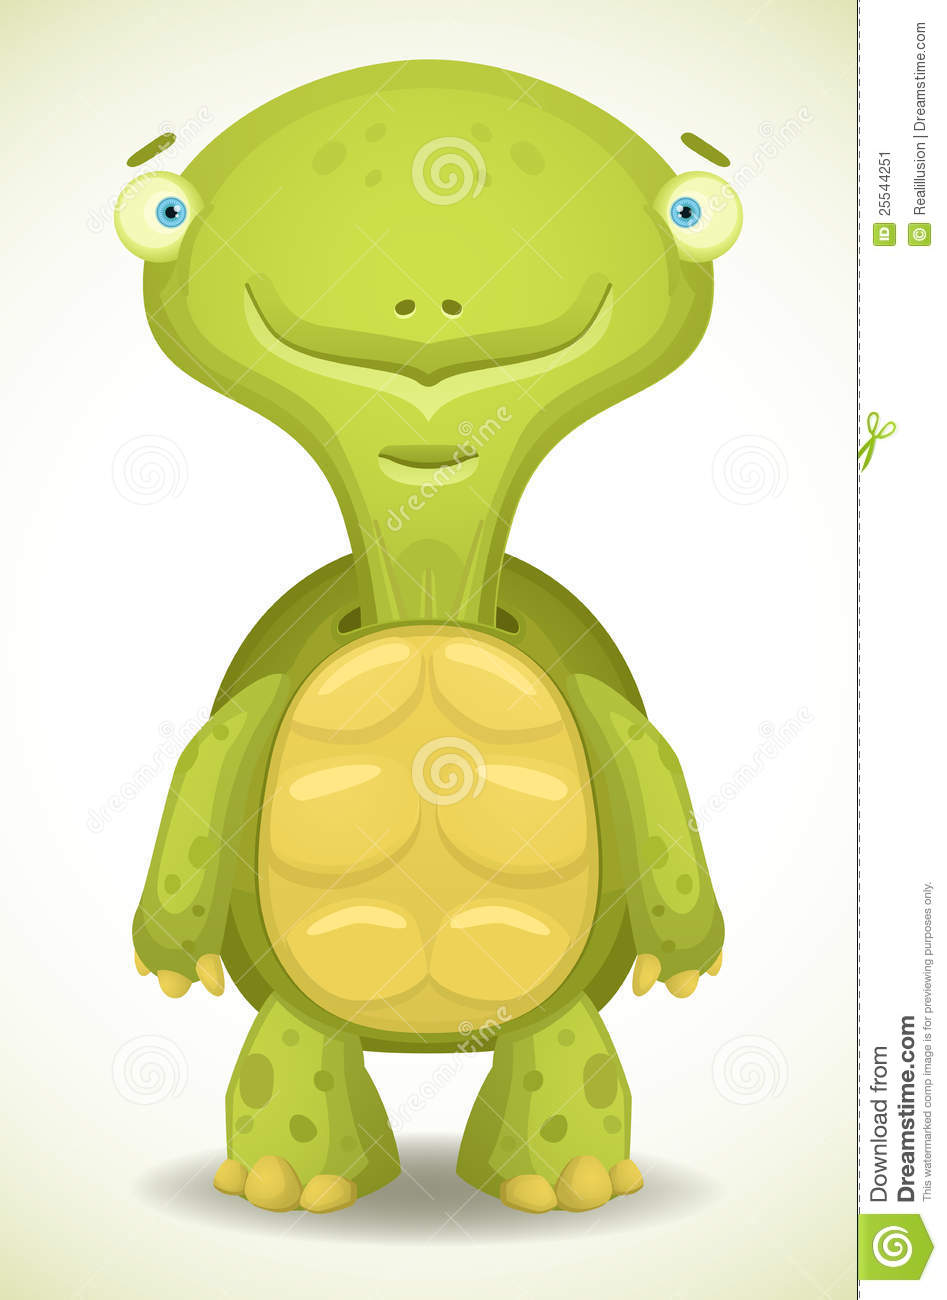 Cartoon Turtle Stock Image   Image  25544251